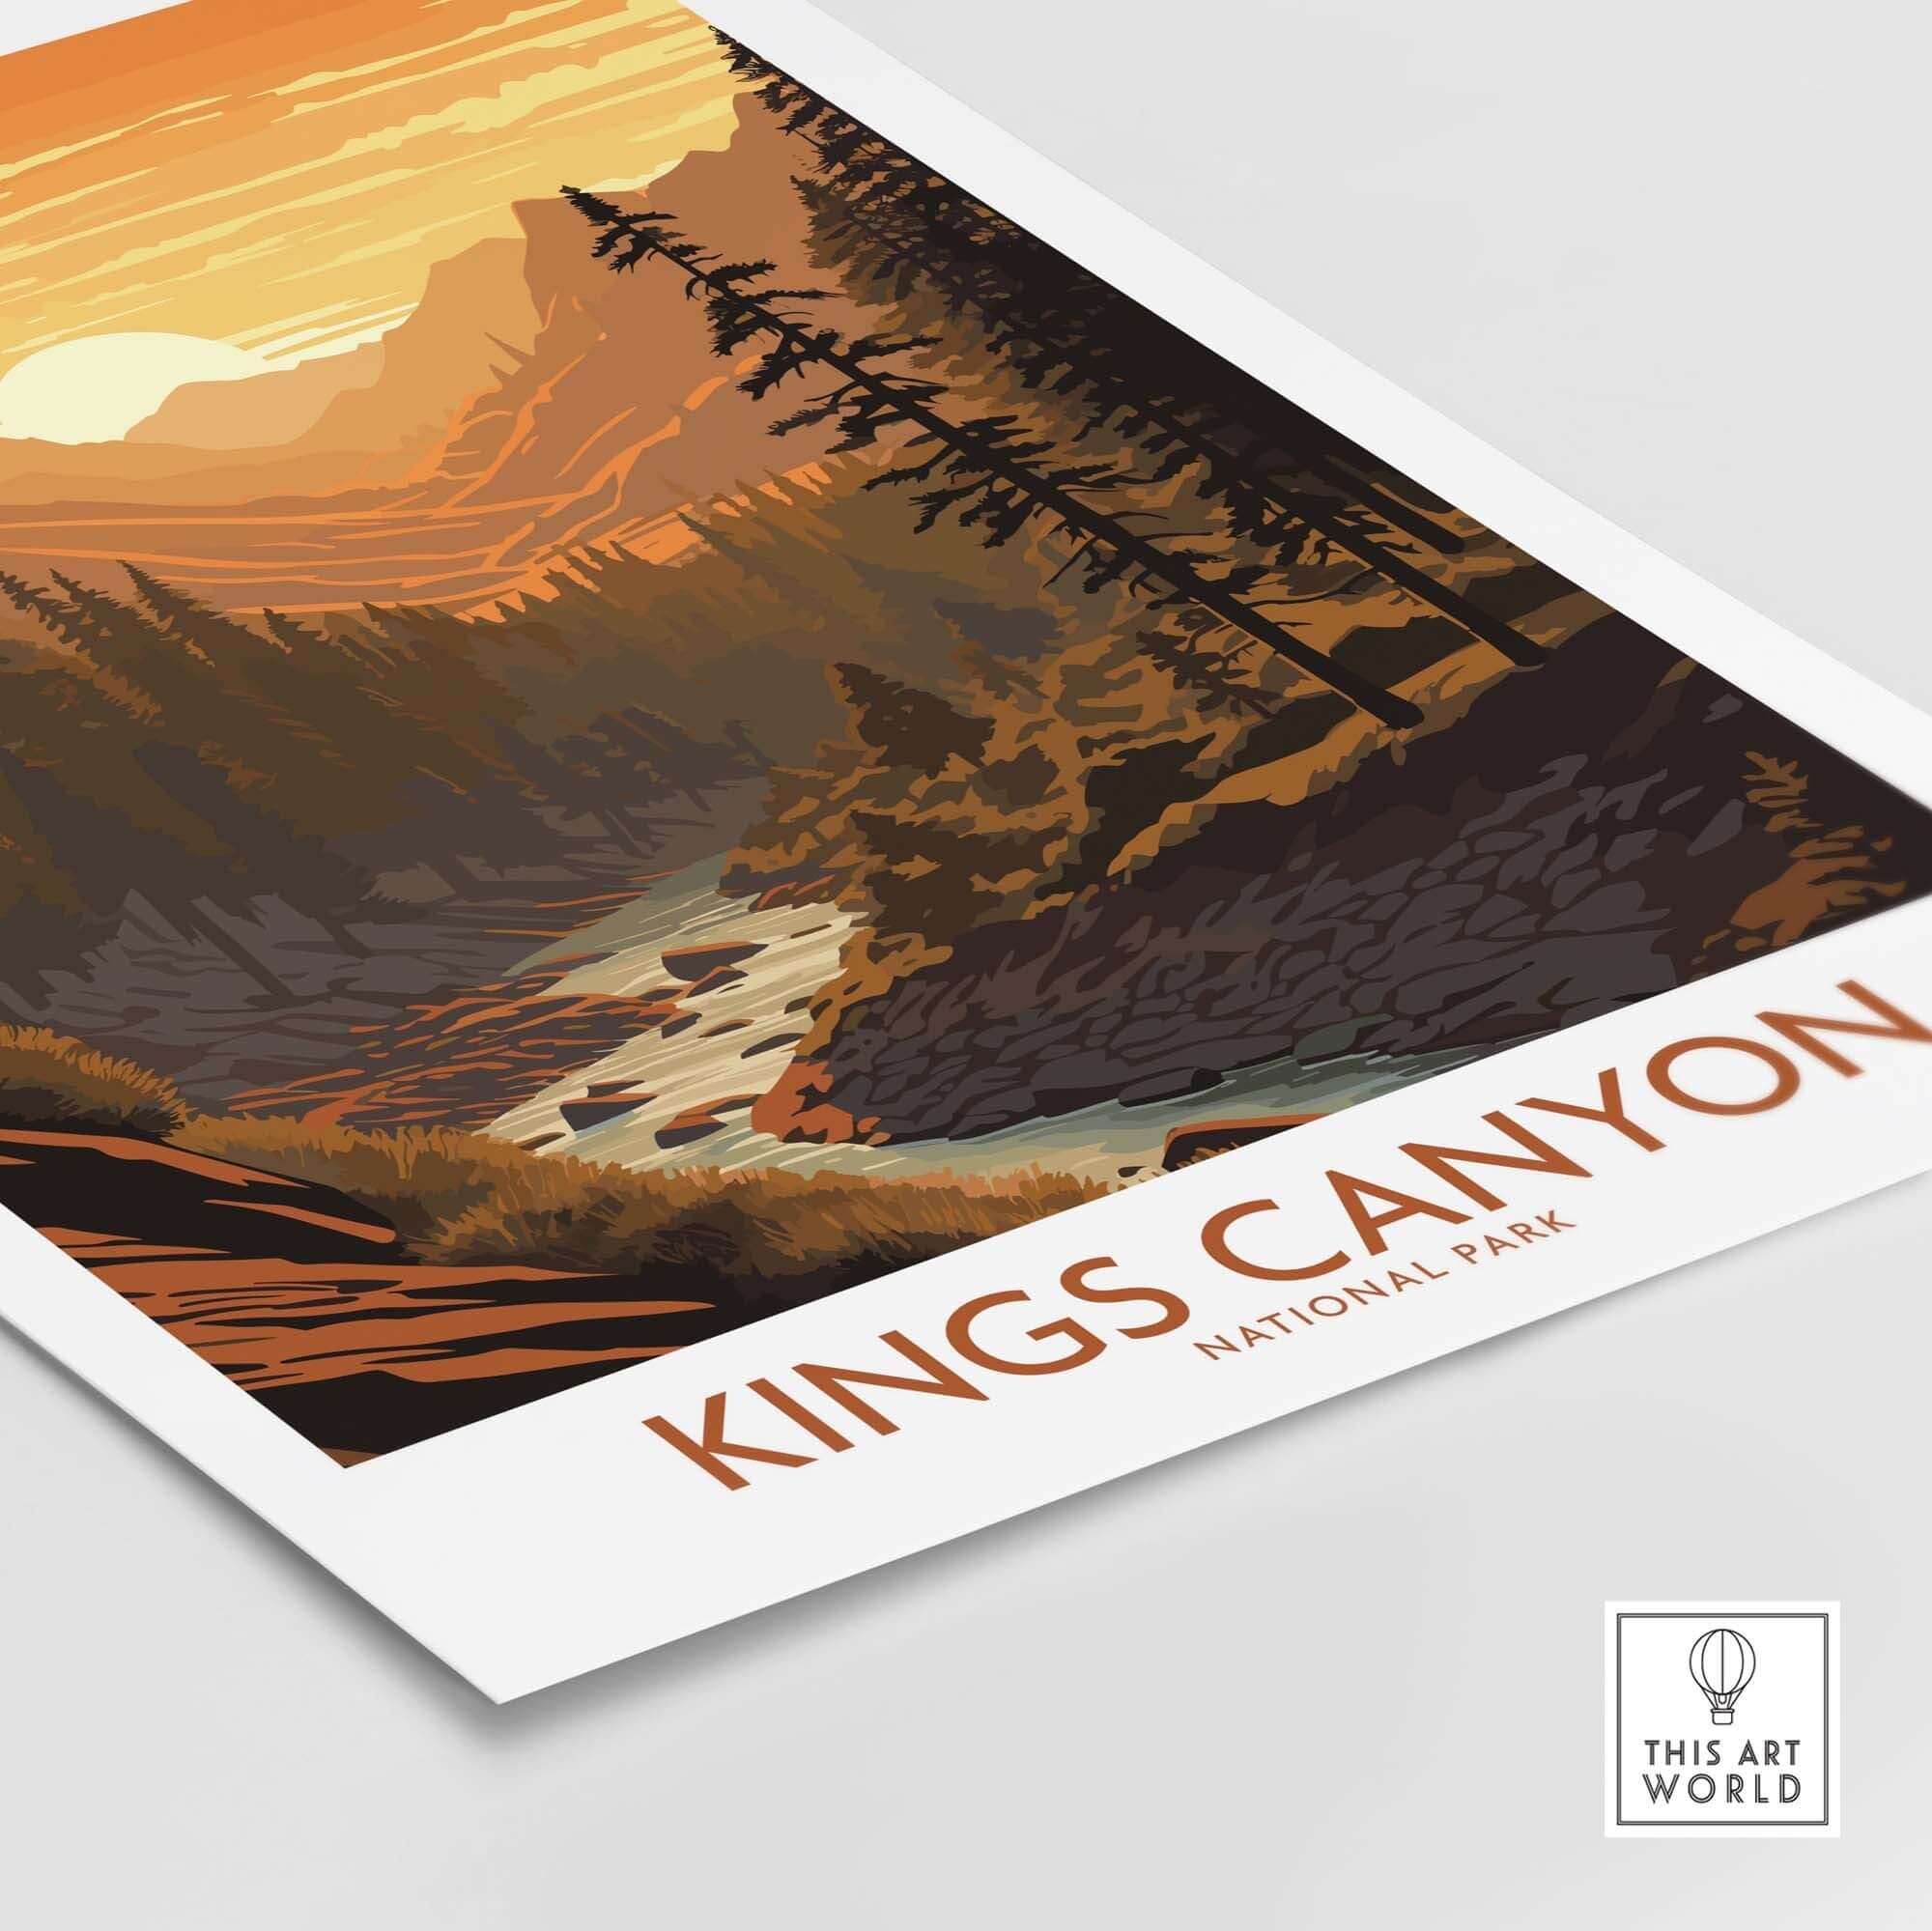 Kings Canyon Print